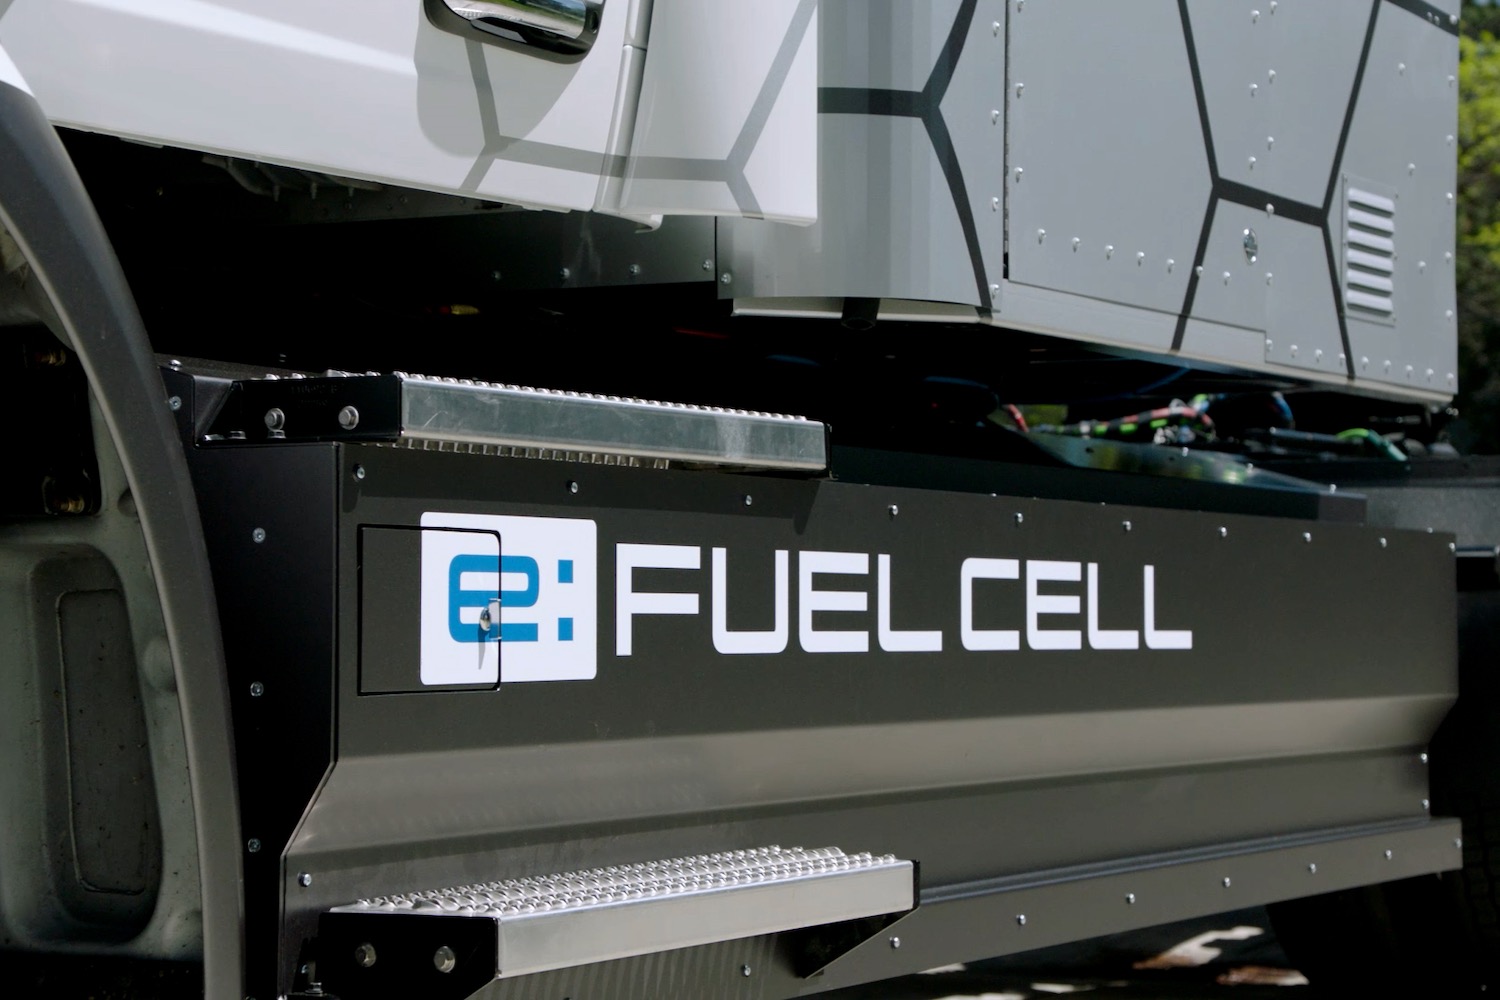 Honda fuel-cell semi truck detail shot.